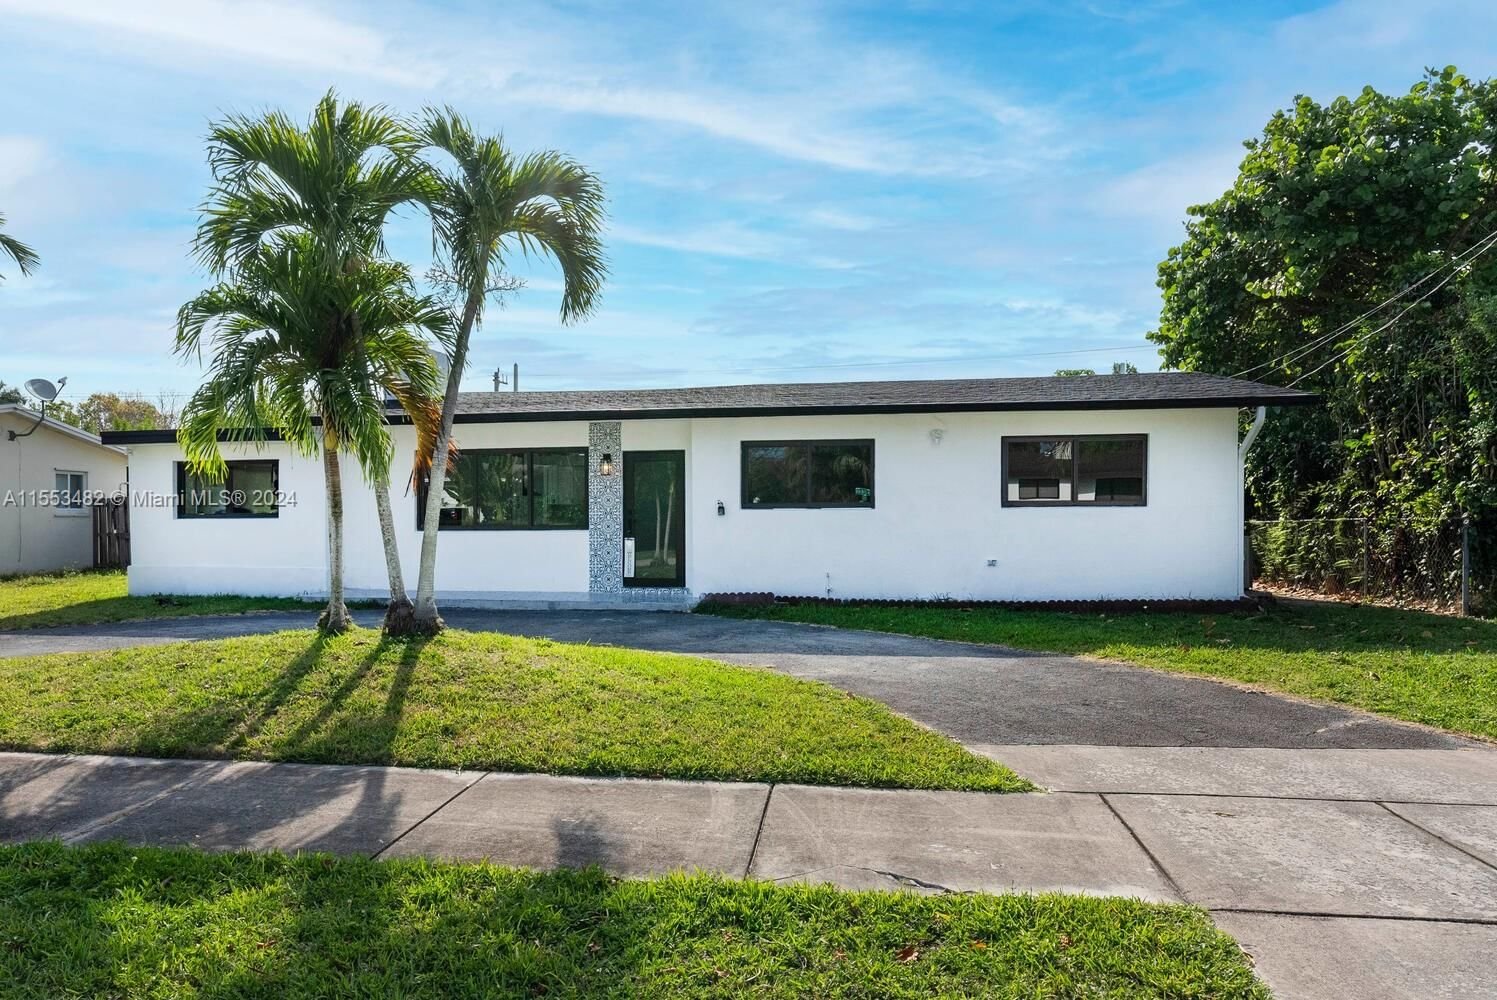 Real estate property located at 12601 84th Ave Rd, Miami-Dade County, RANCHERO HOMESITES, Miami, FL